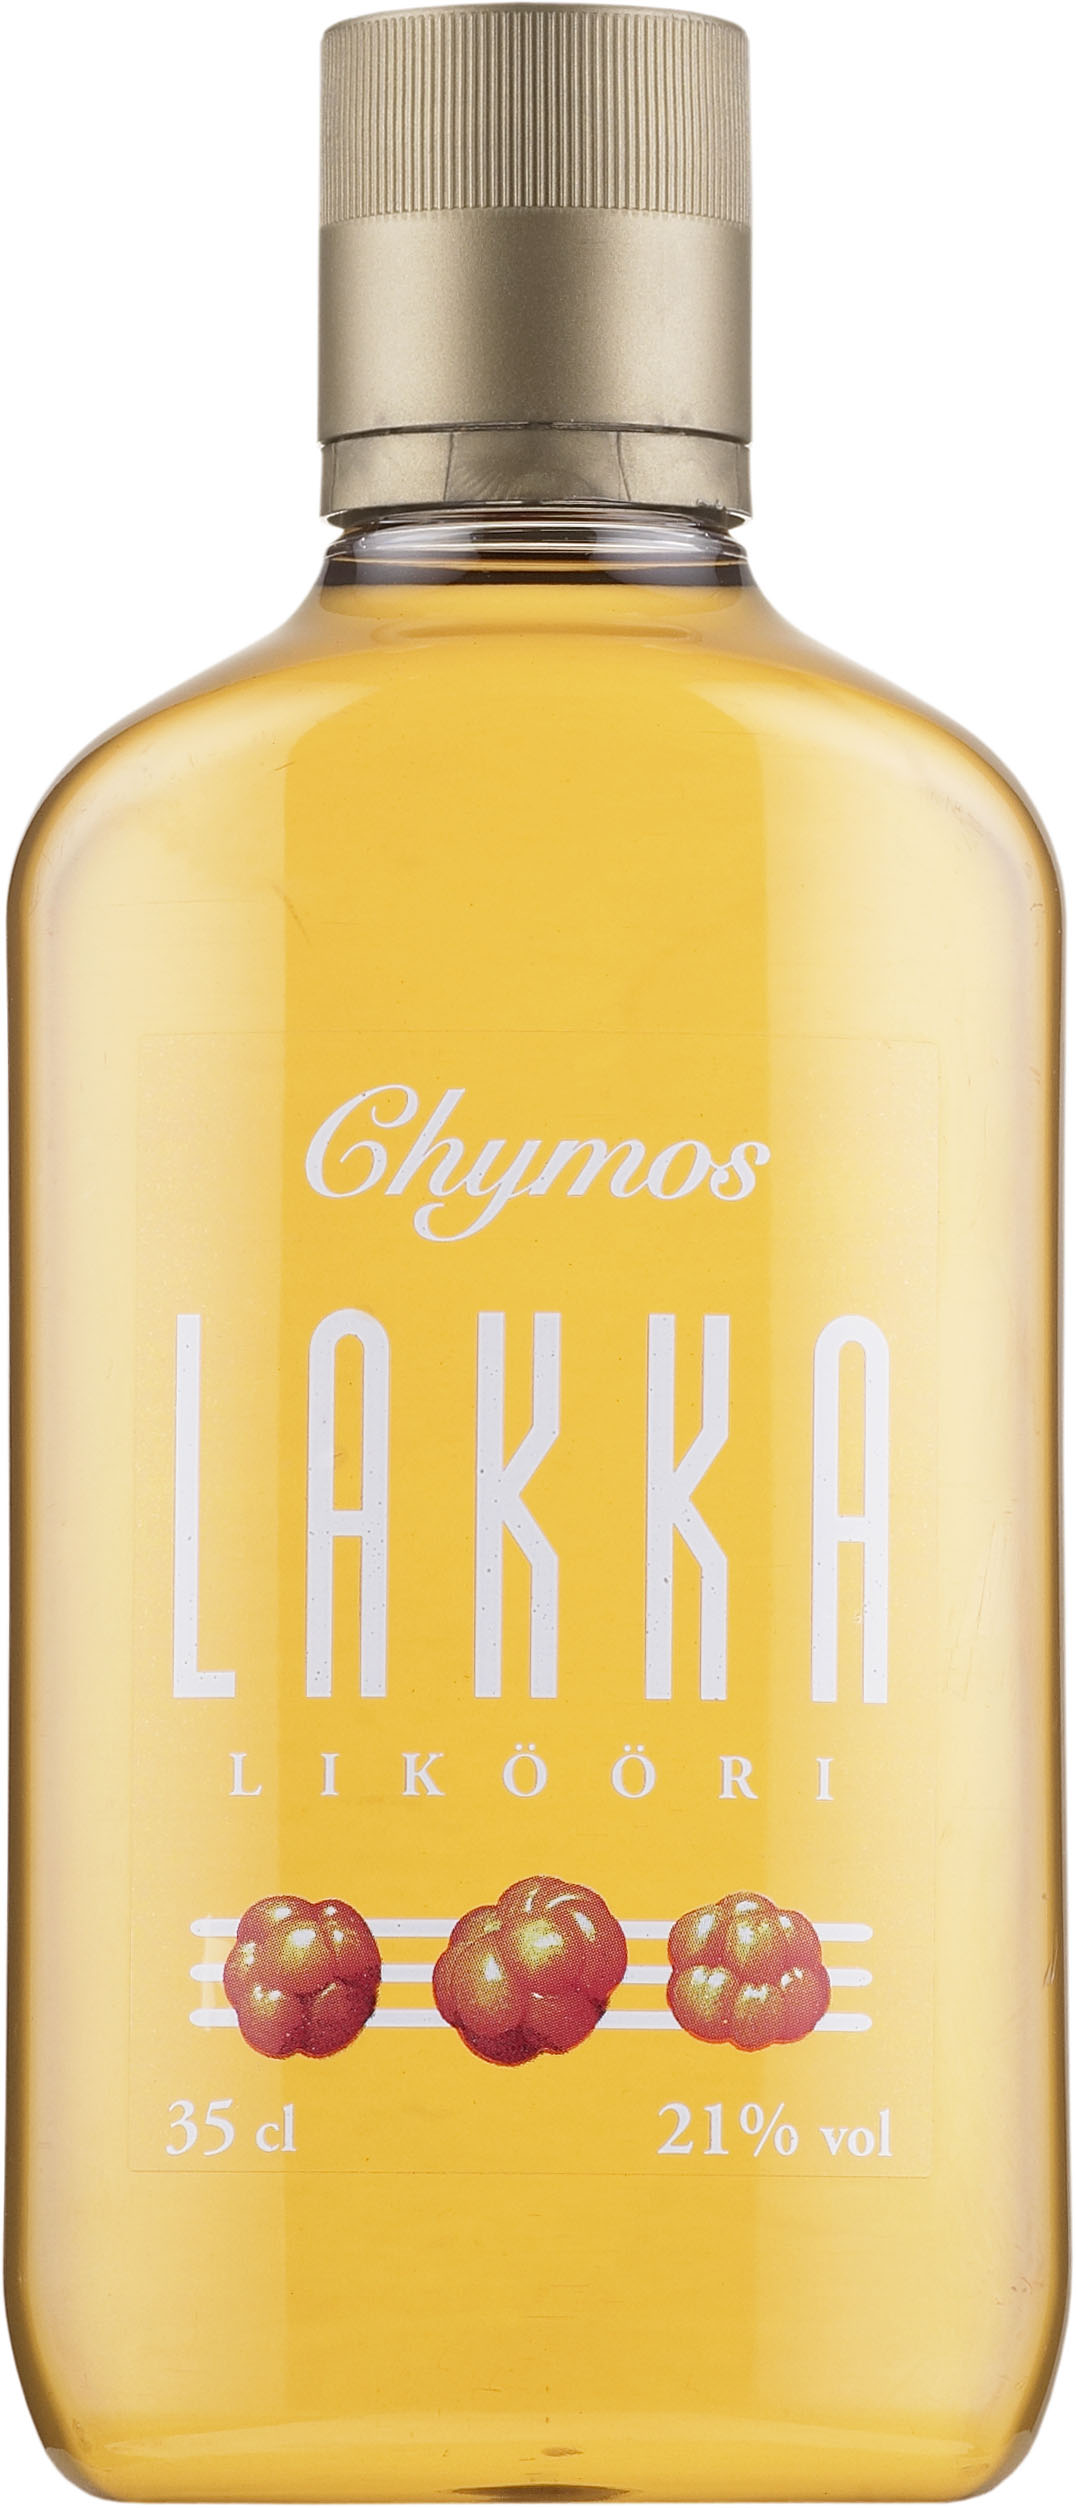 Chymos Lakka plastic bottle